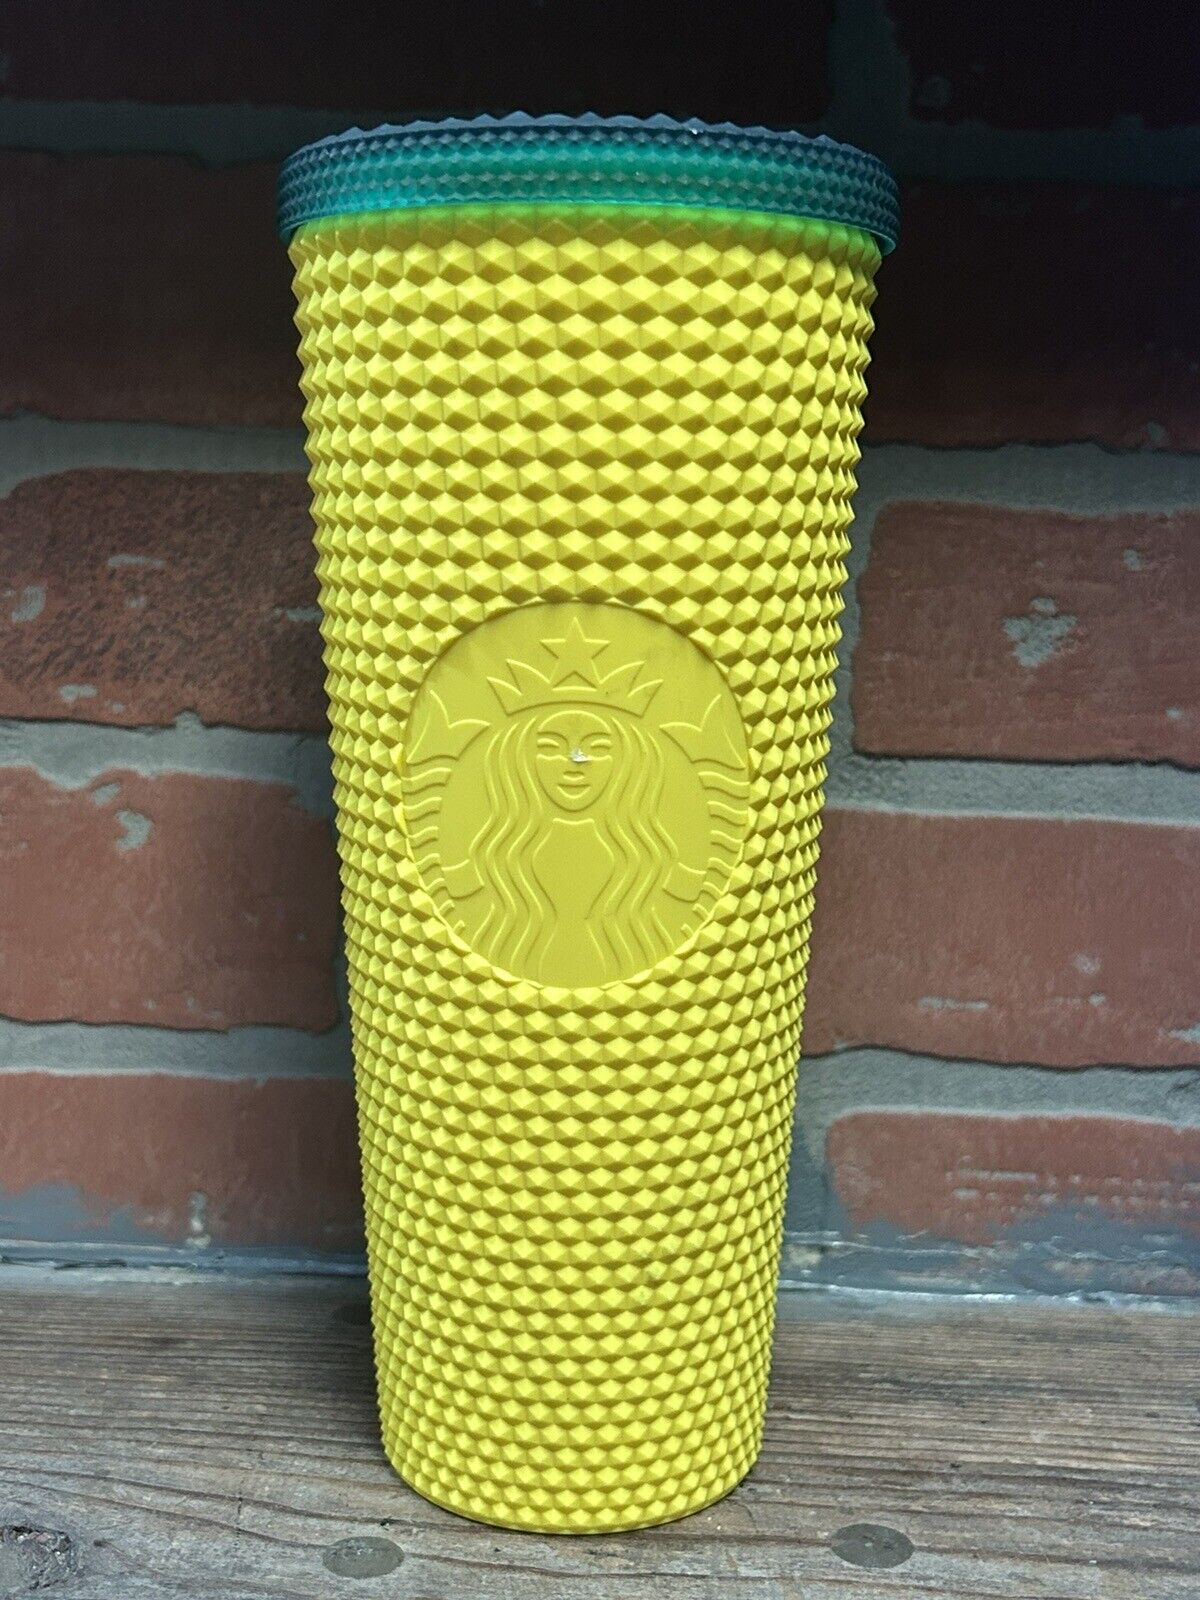 Starbucks Hawaii Pineapple Studded Cup 24oz.  Coffee Water NO STRAW Yellow